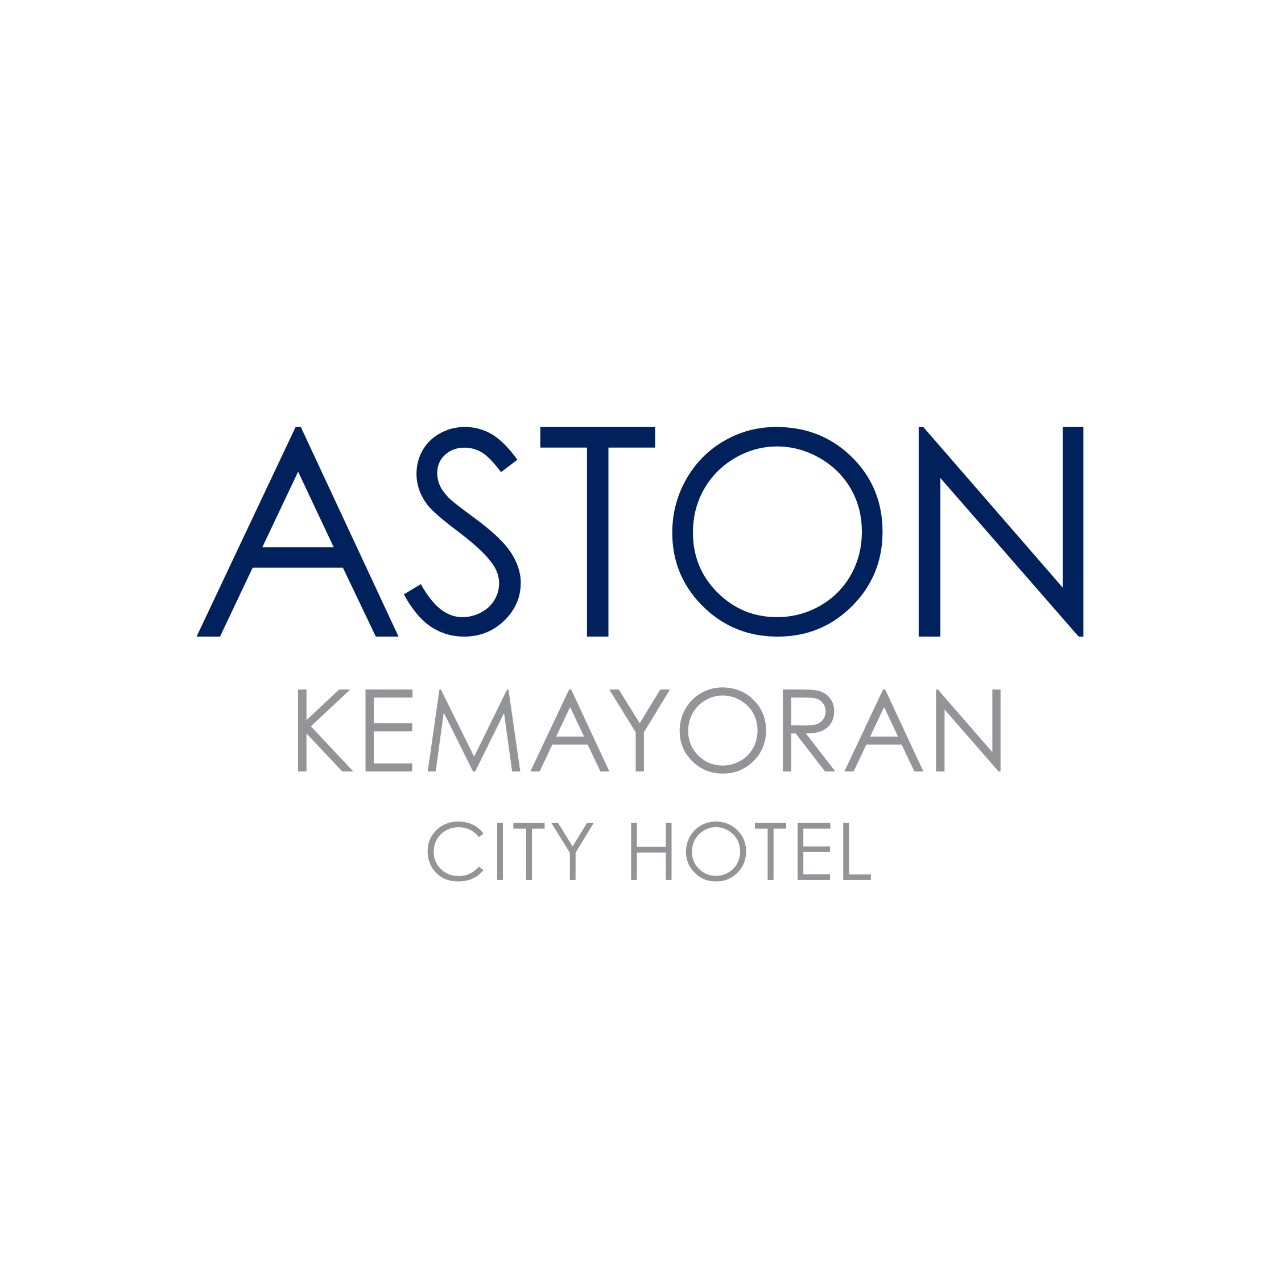 Aston Kemayoran City Hotel logo